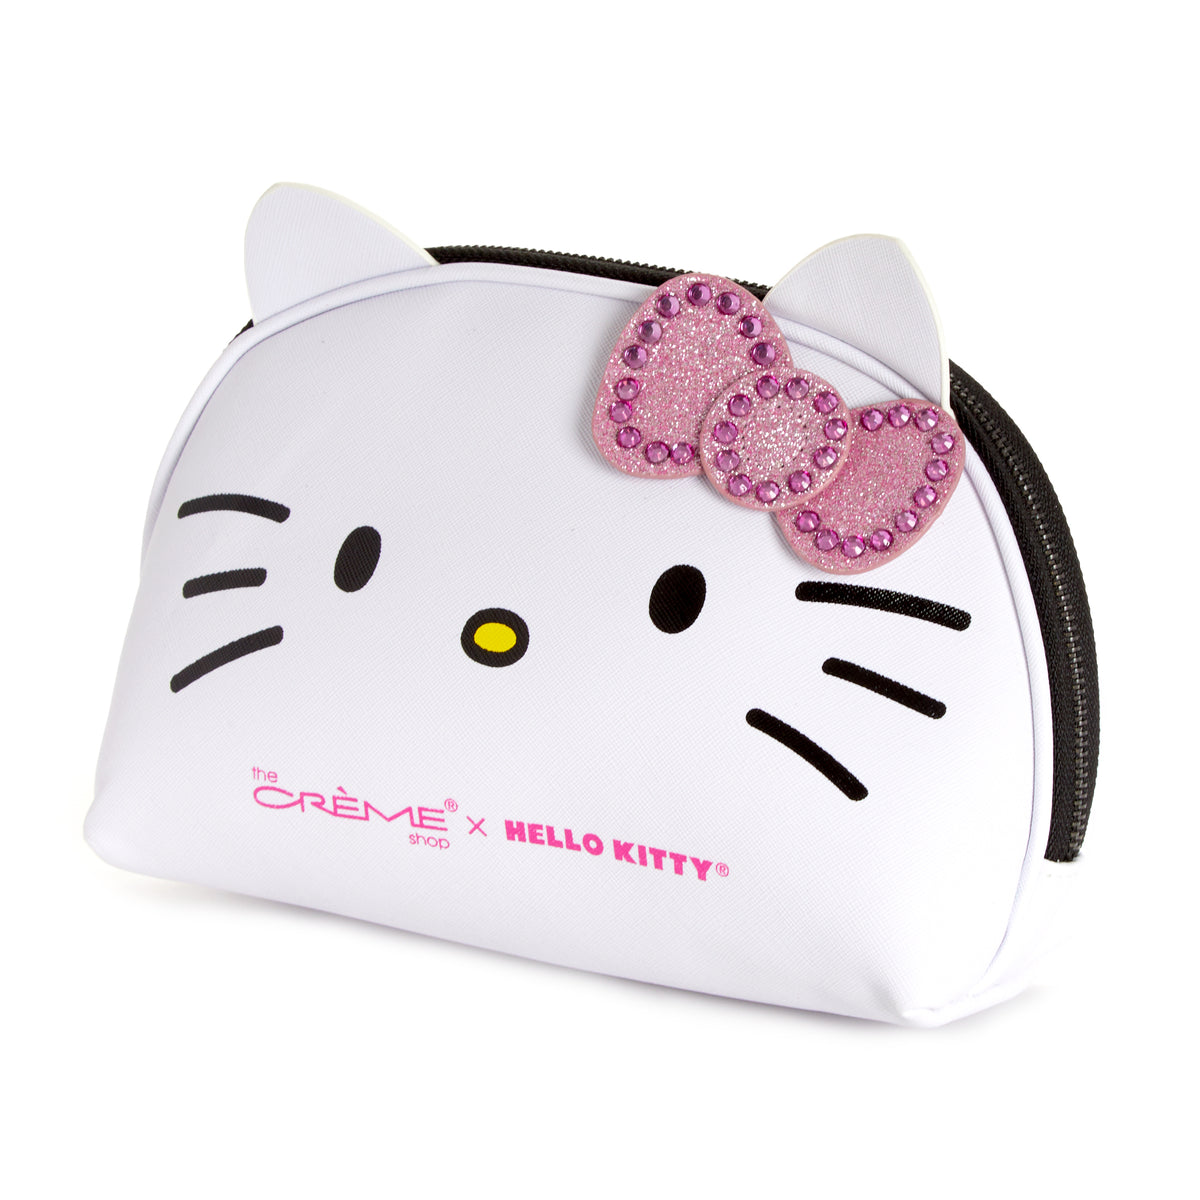 Skinnydip x Hello Kitty make up bag